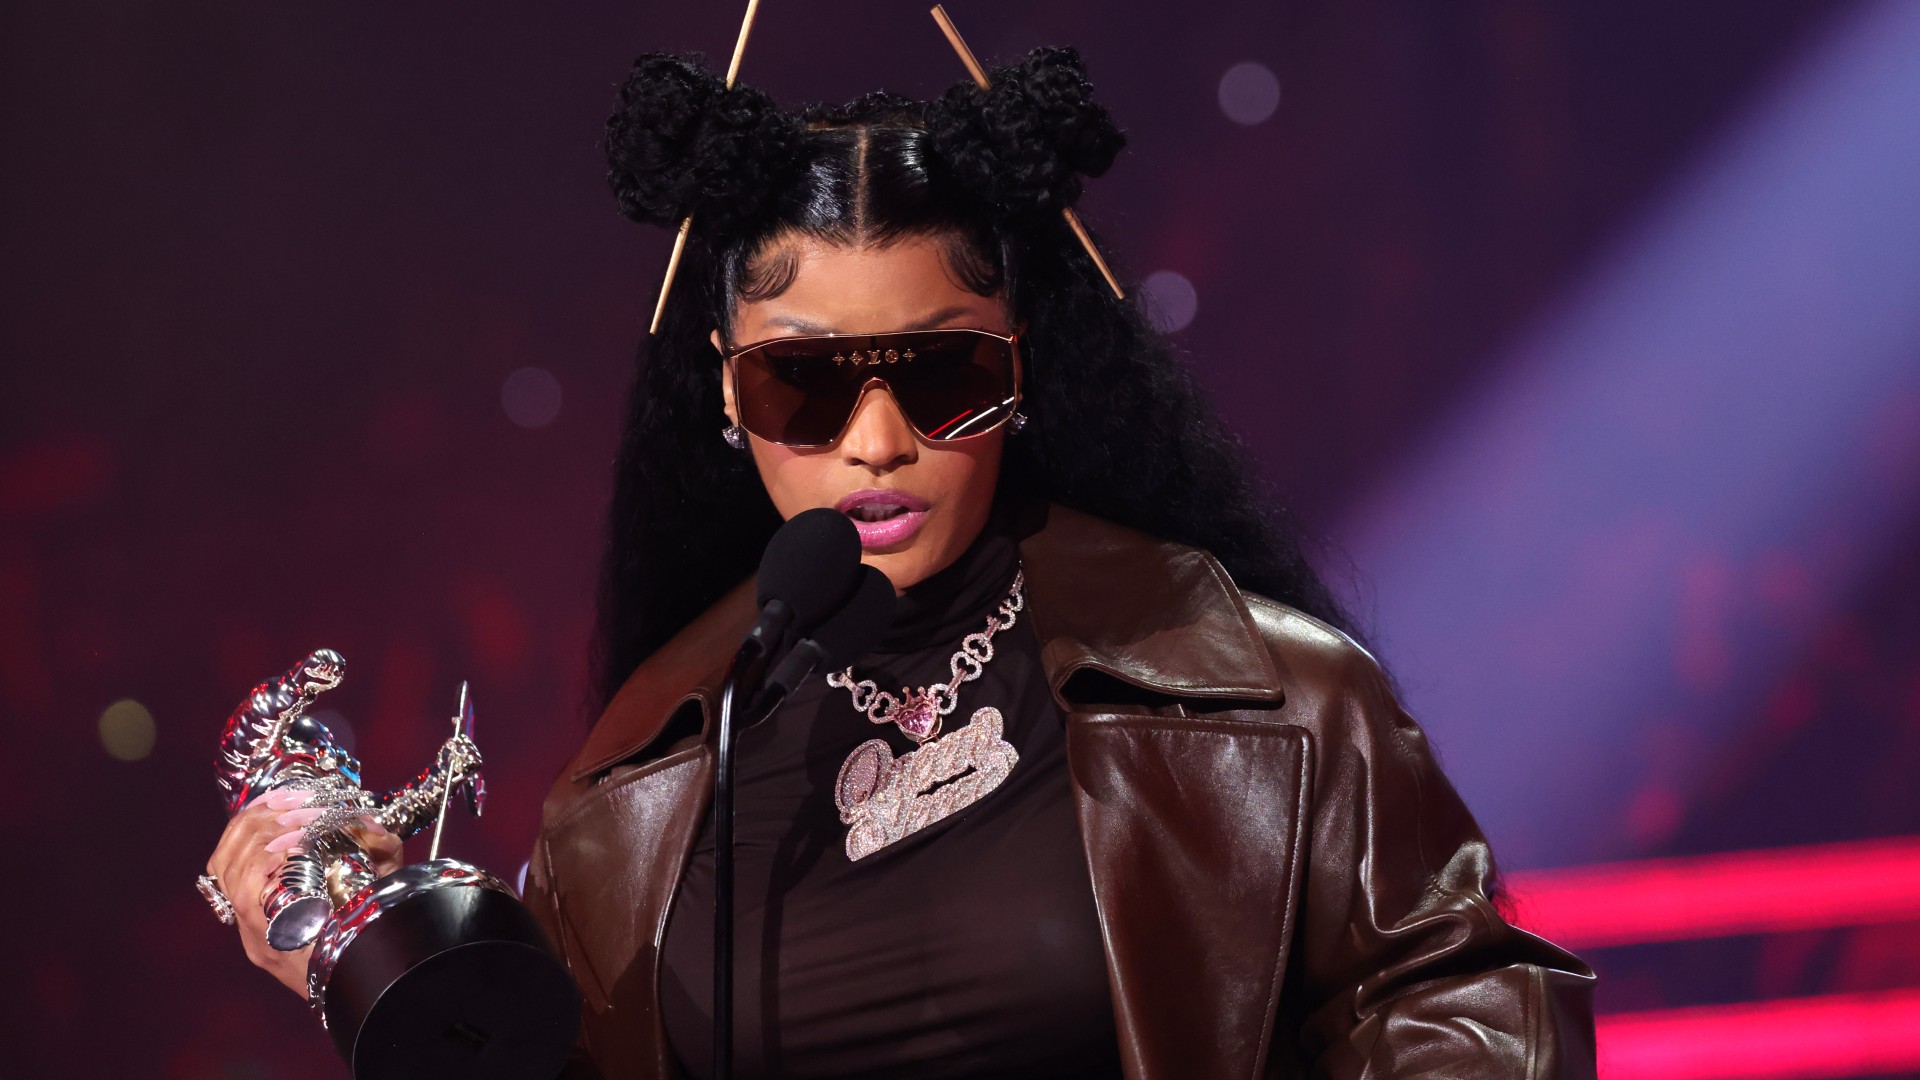 Nicki Minaj’s New Album Sparks Fan Reactions